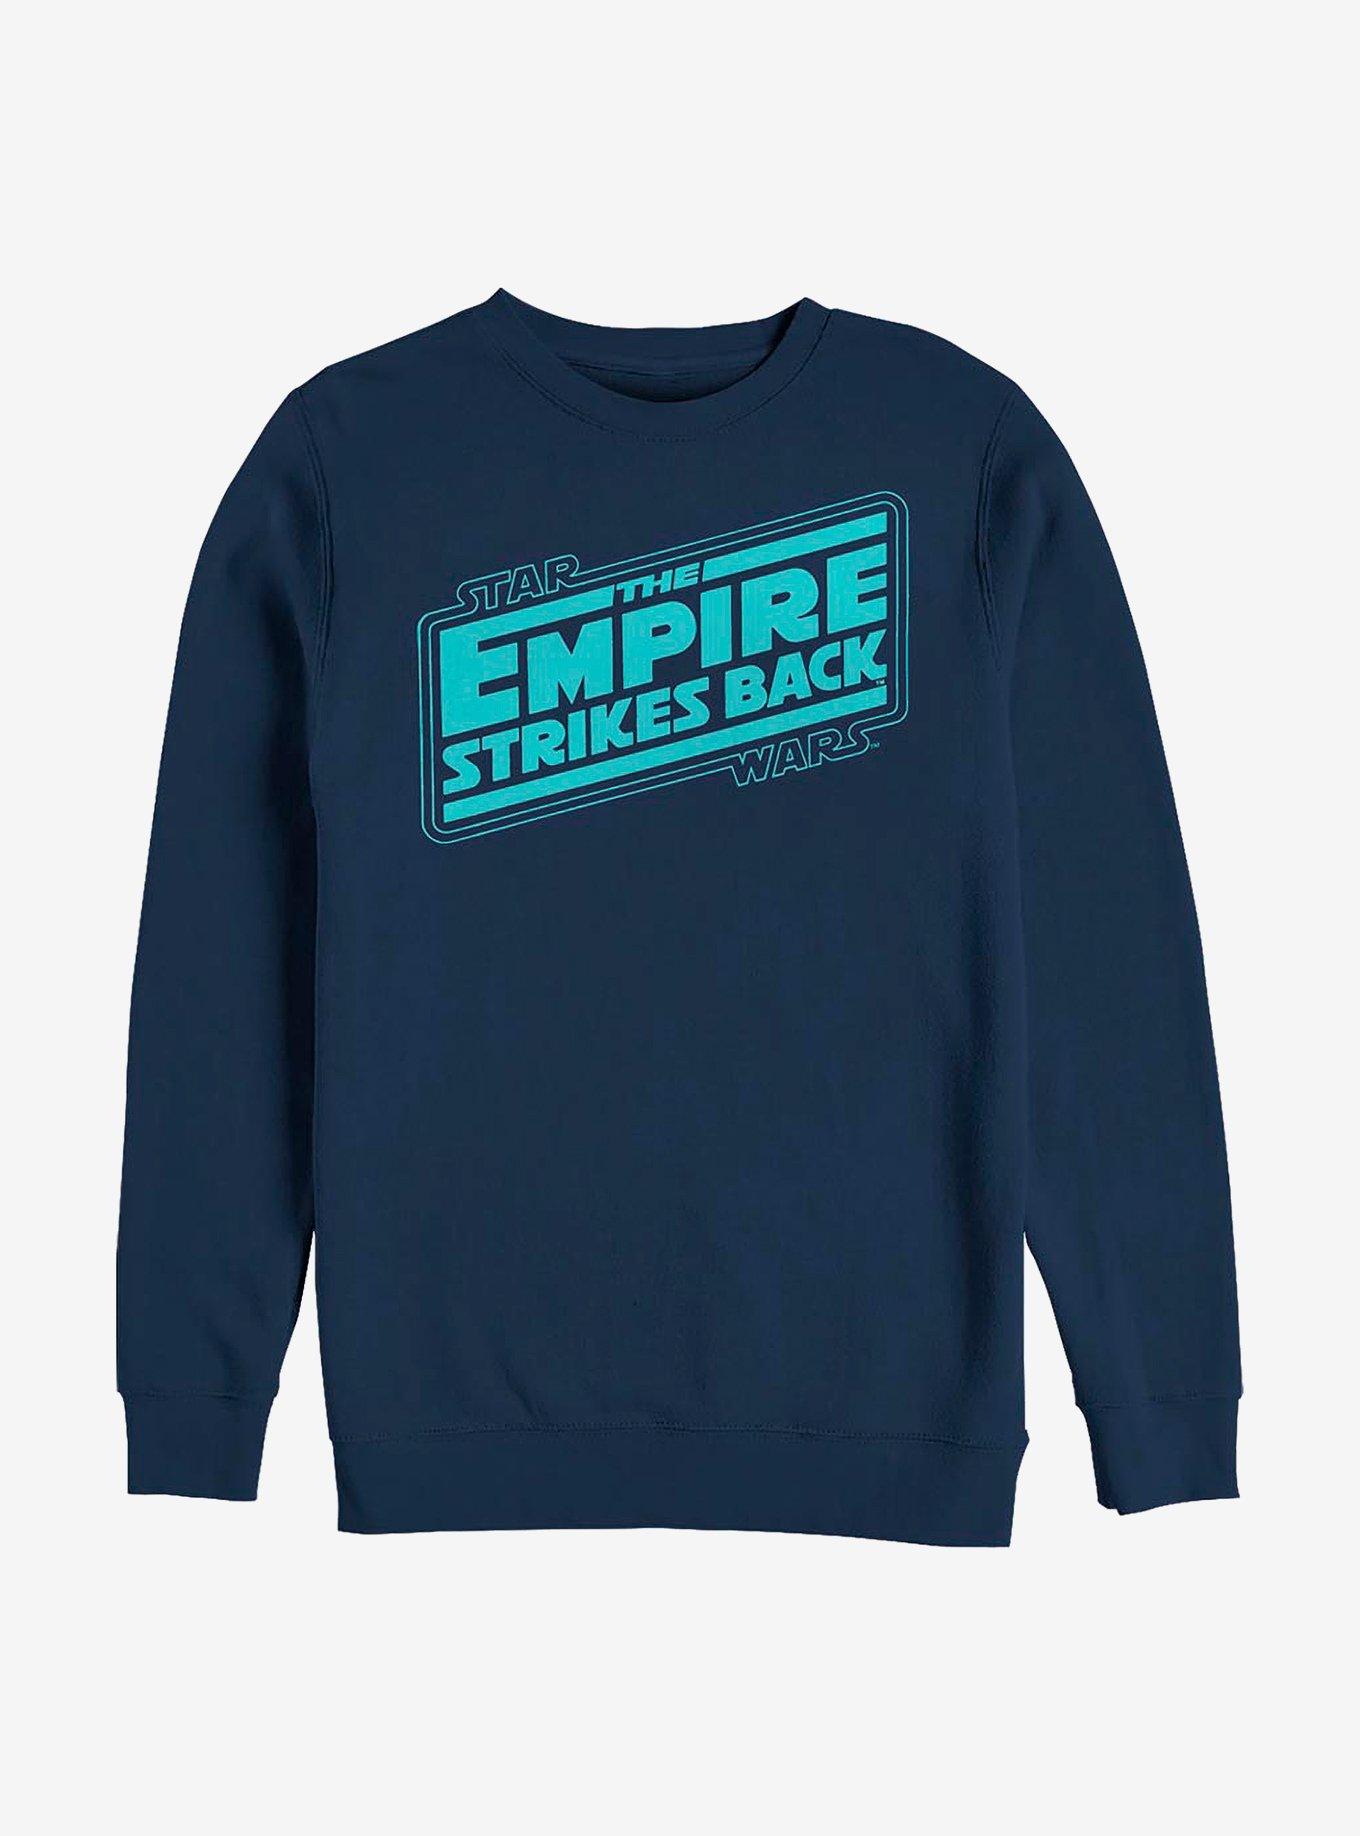 Star Wars Strikes Back Crew Sweatshirt, , hi-res